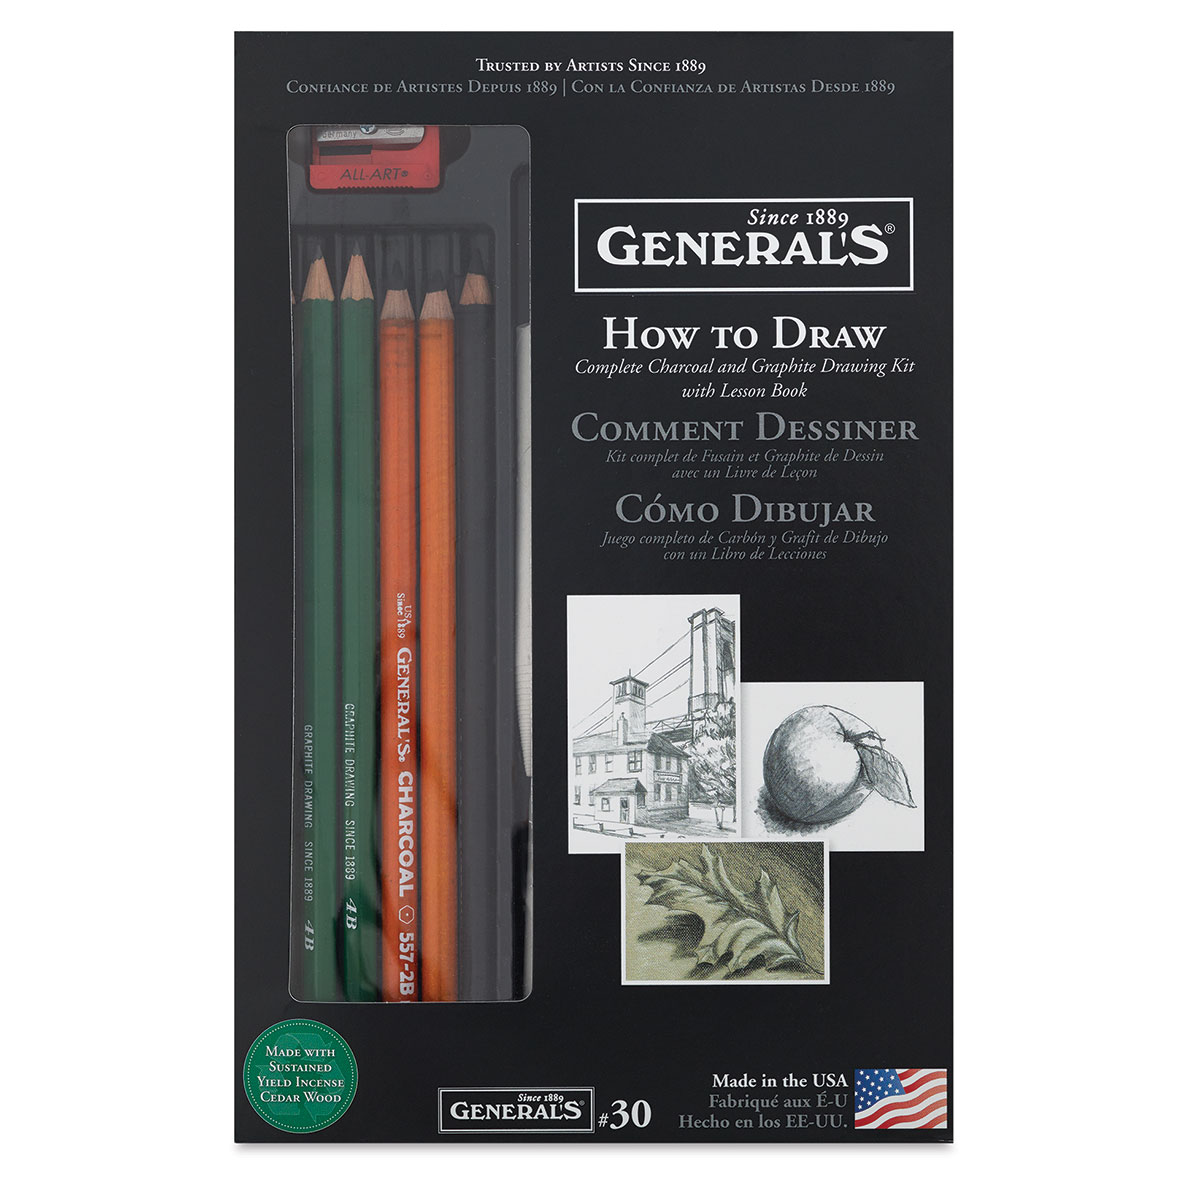 General's #10 Drawing Pencil Kit